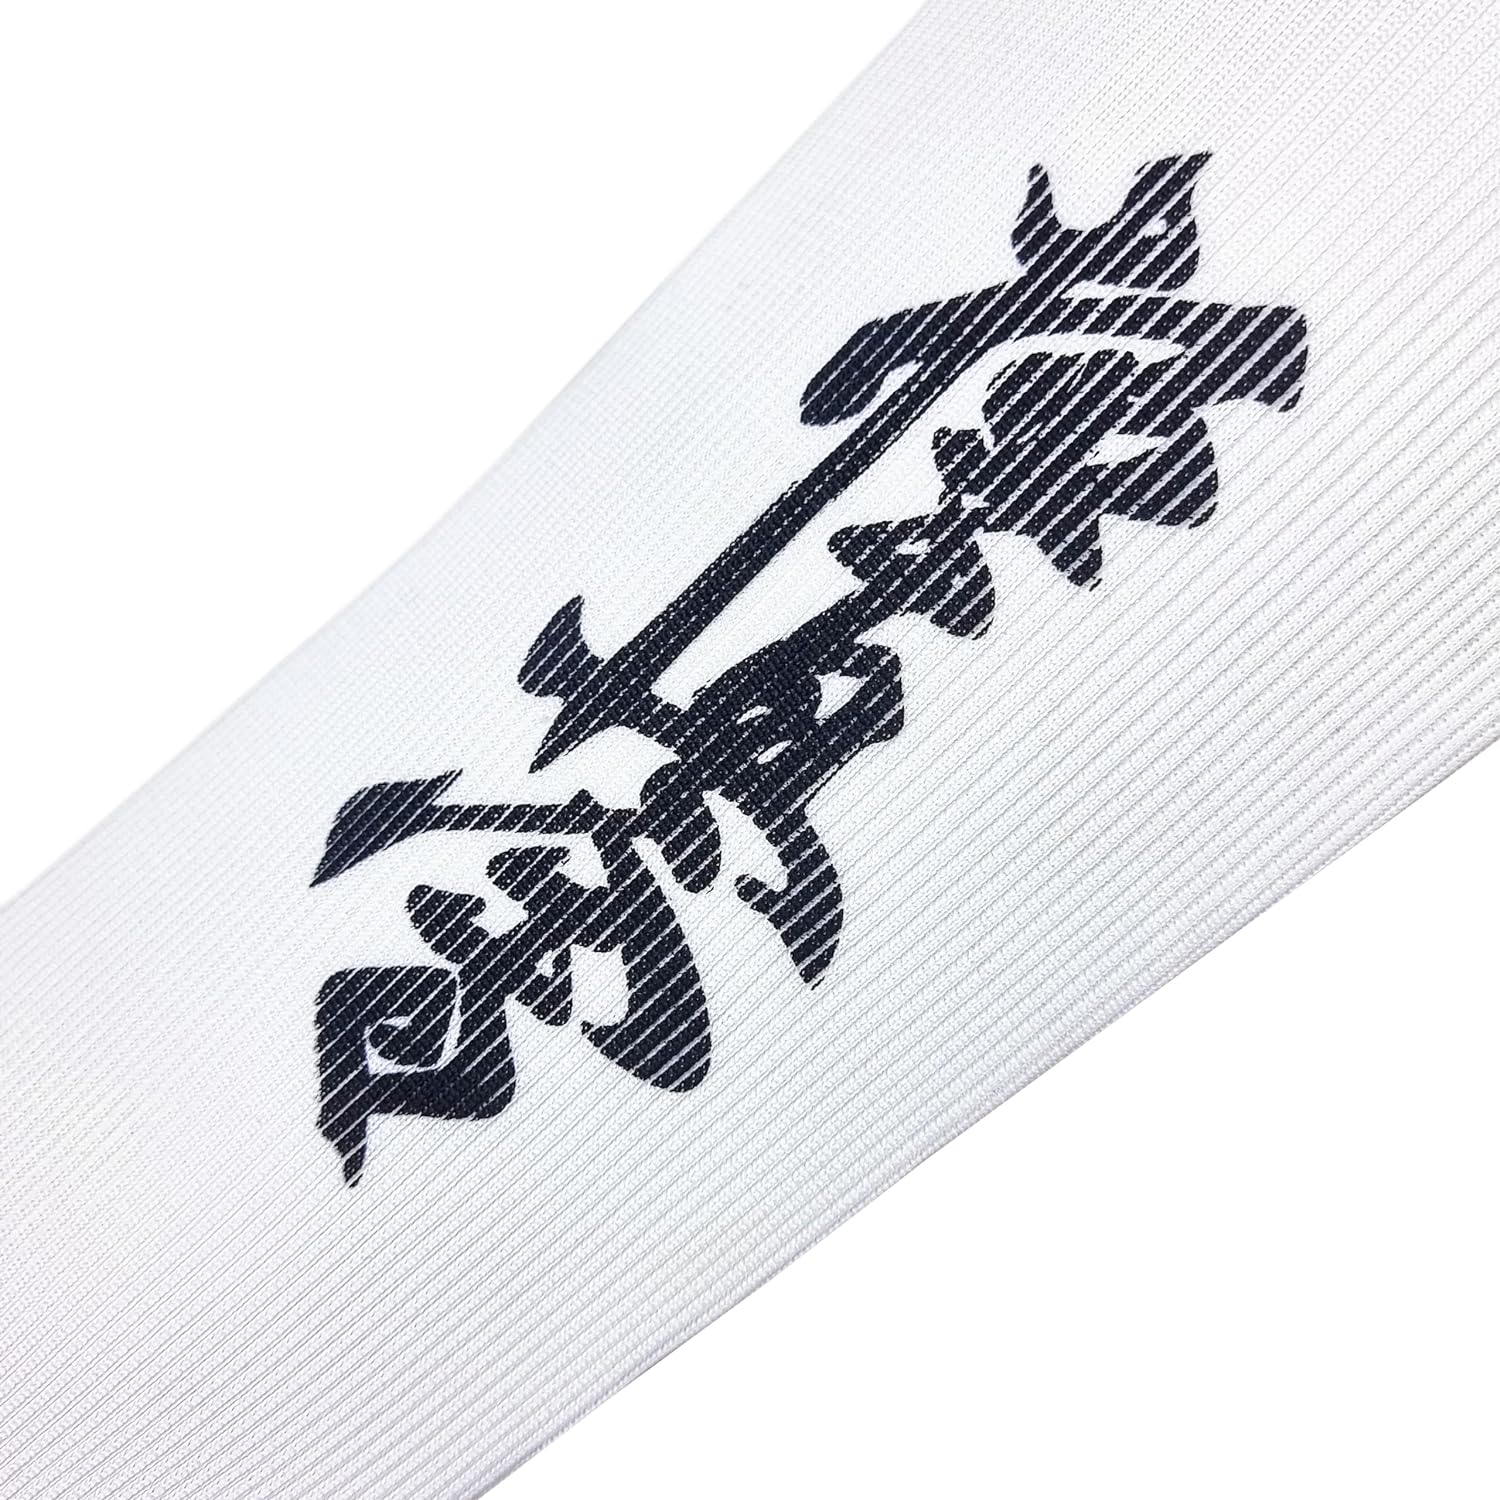 kyokushin-shin-fabric-Instep-mma-sparring-guard